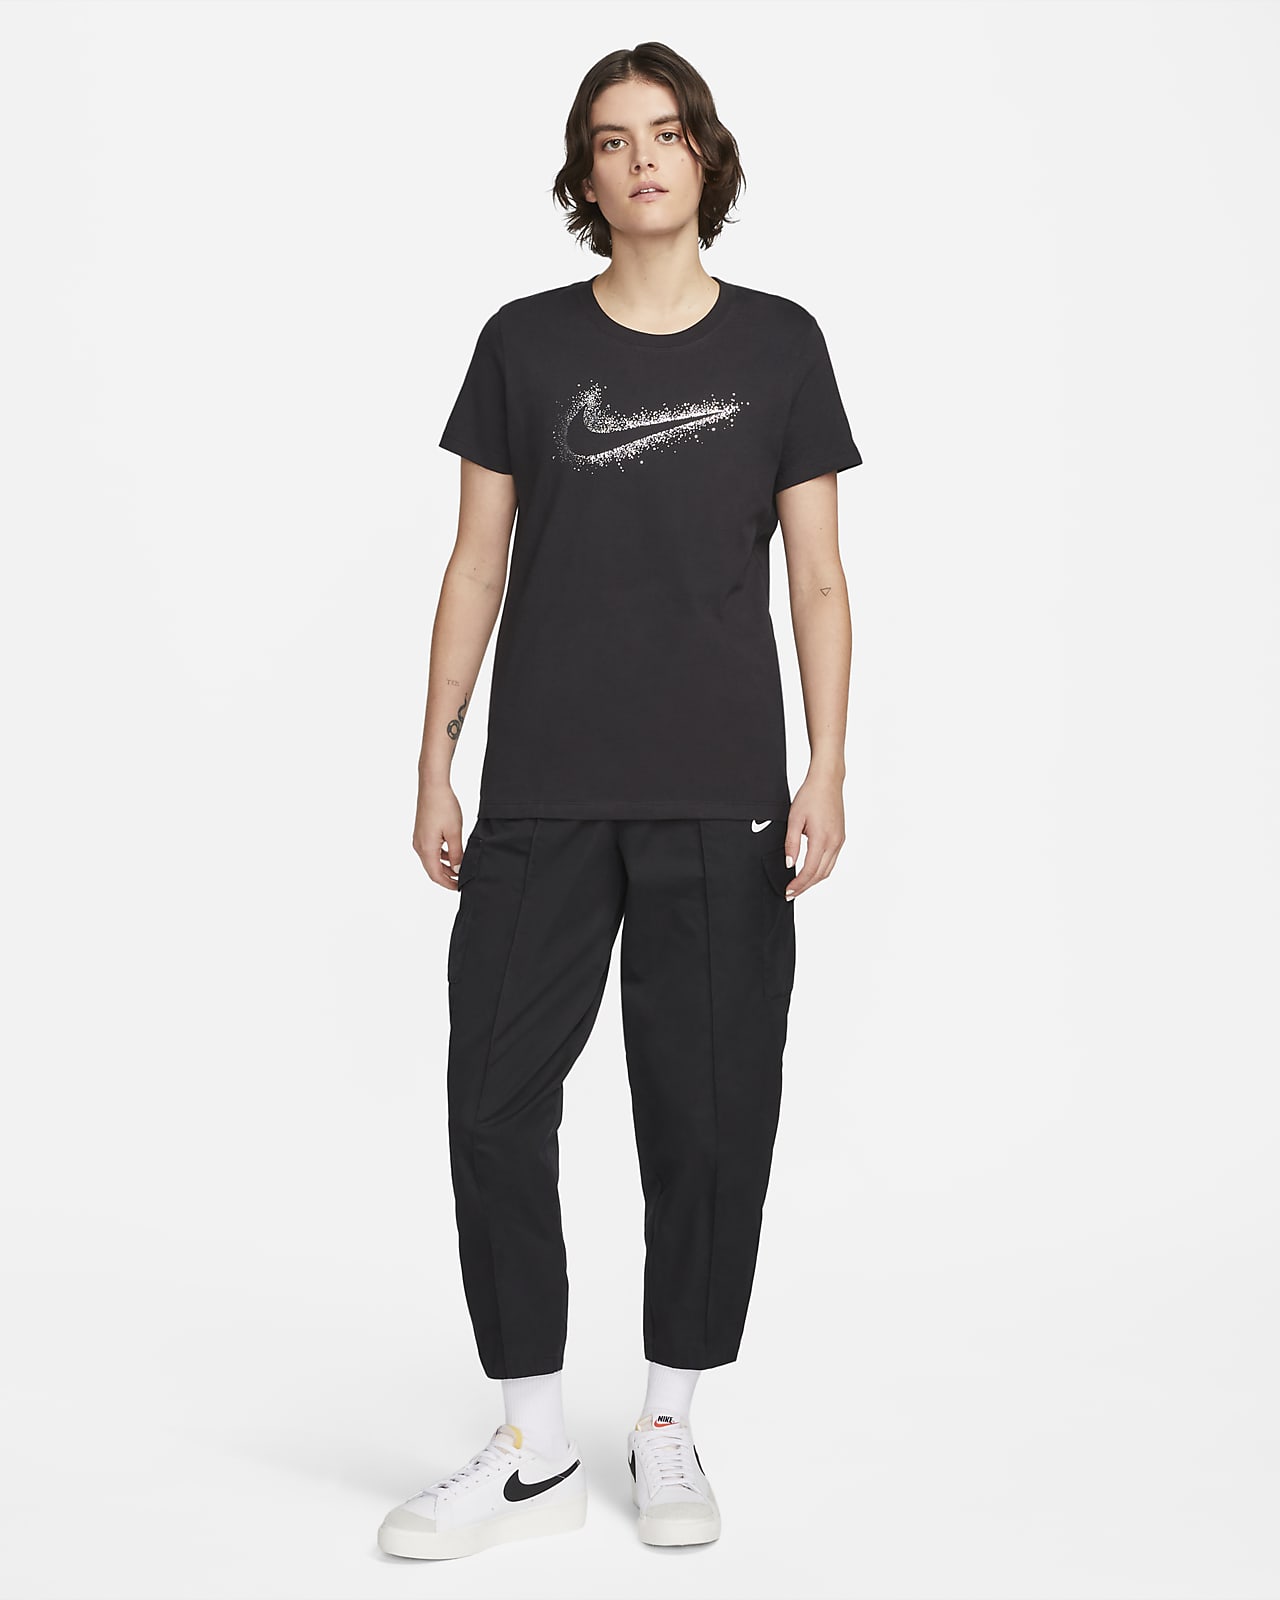 Nike Sportswear Swoosh Women's Graphic T-Shirt. Nike IN